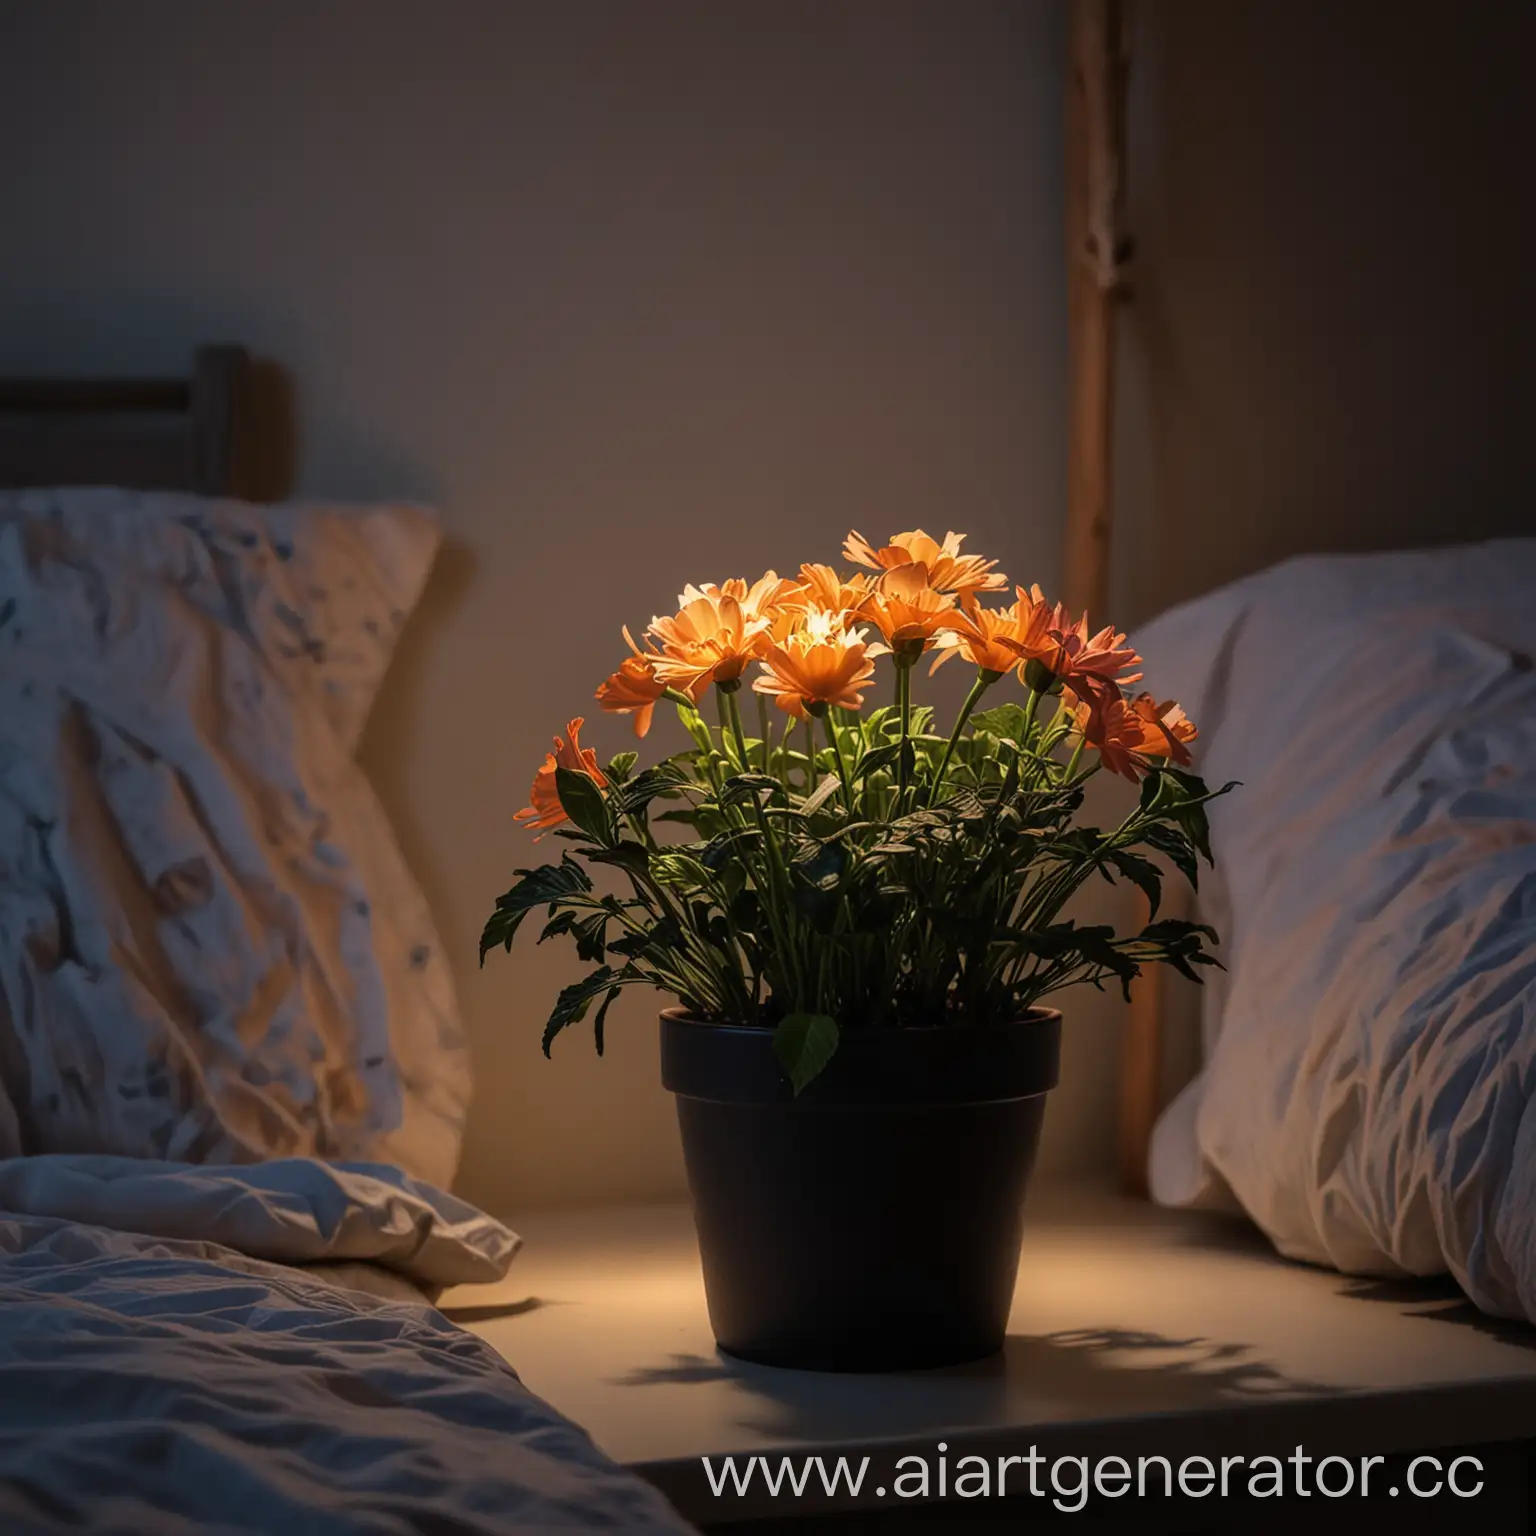 Childs-Bedside-Glowing-Flower-Illuminated-Nighttime-Decor